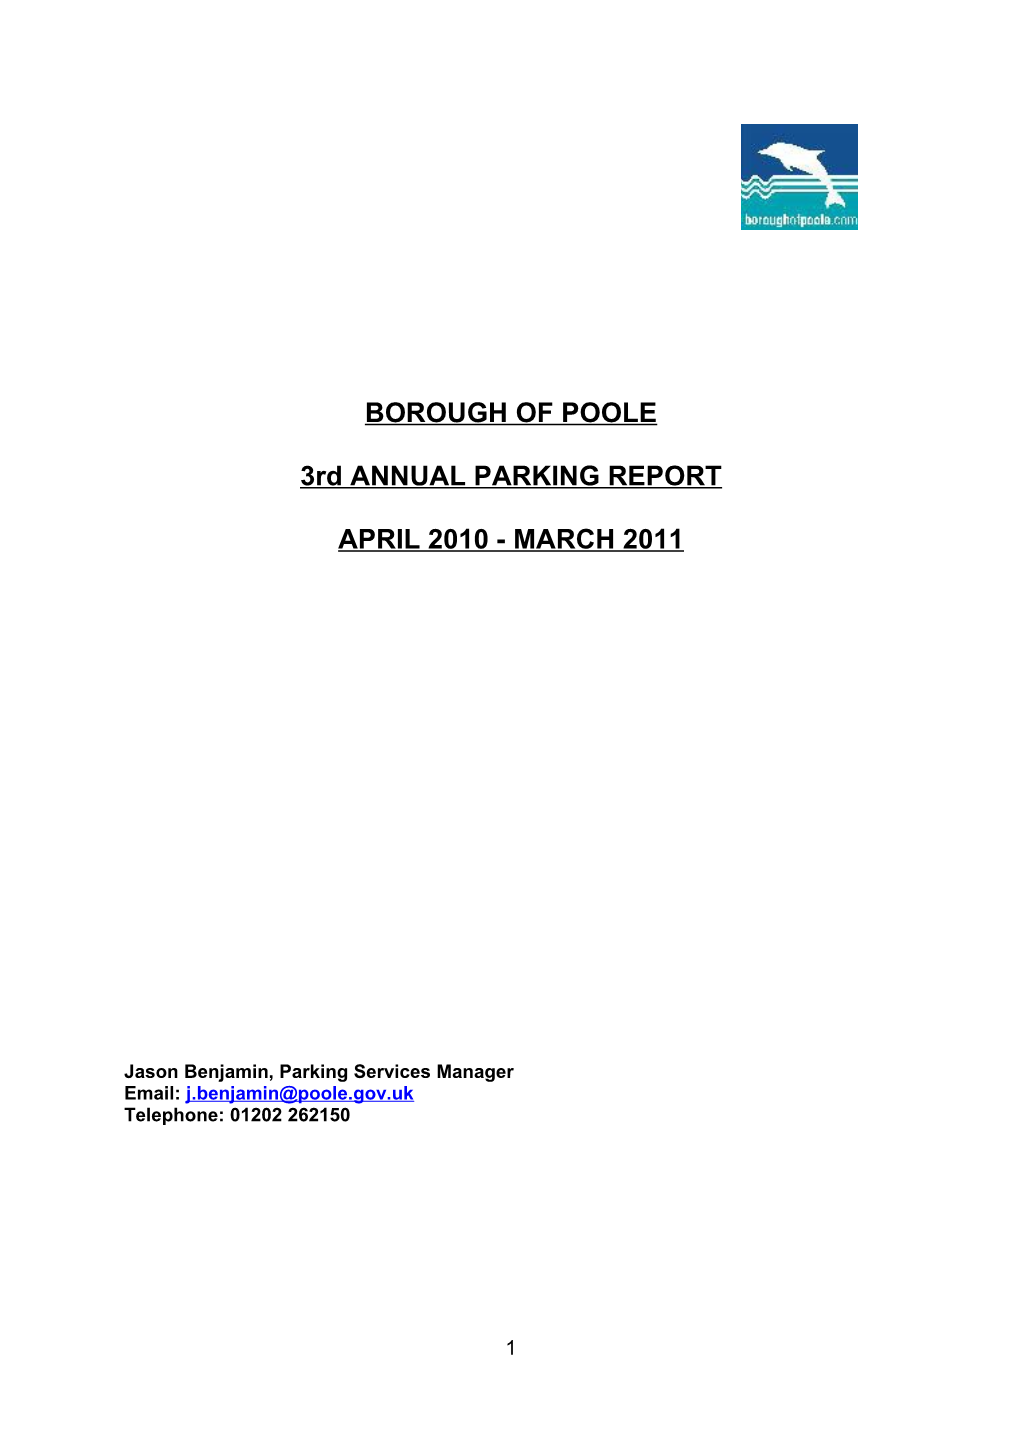 Third Annual Parking Report April 2010 March 2011 - Appendix A